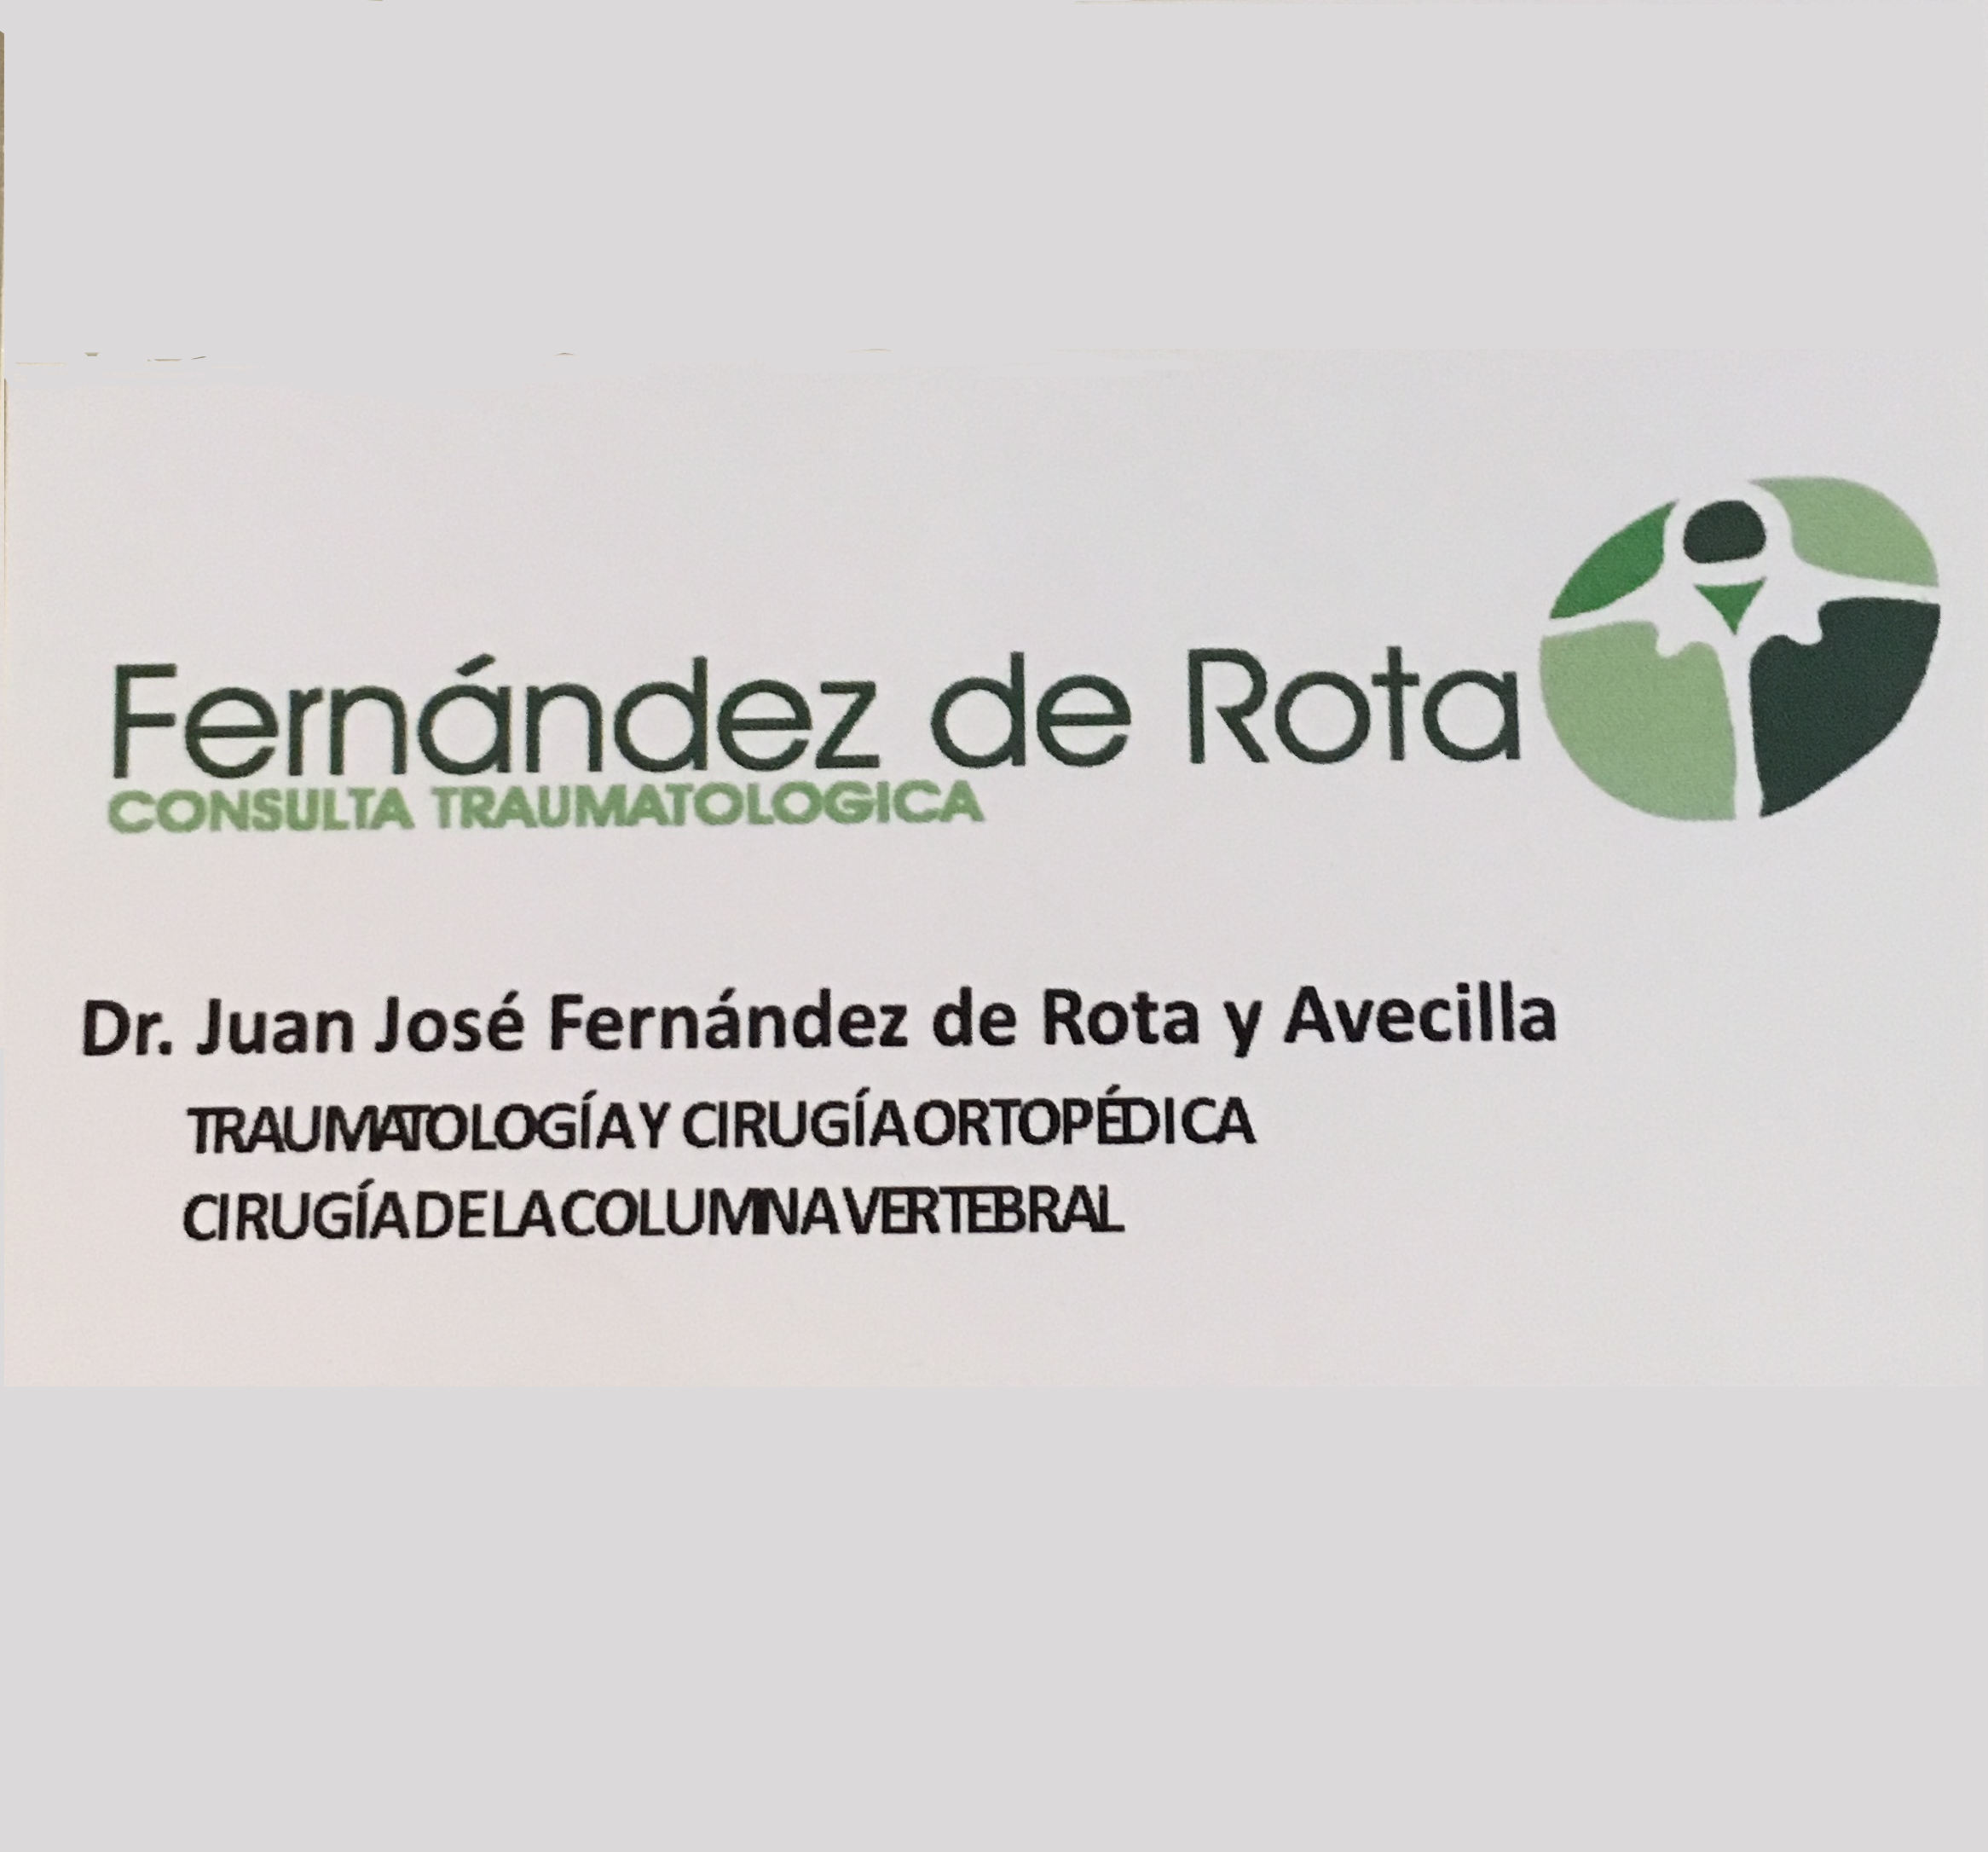 Images Dr. Juan José Fernández de Rota Avecilla Traumatólogo.